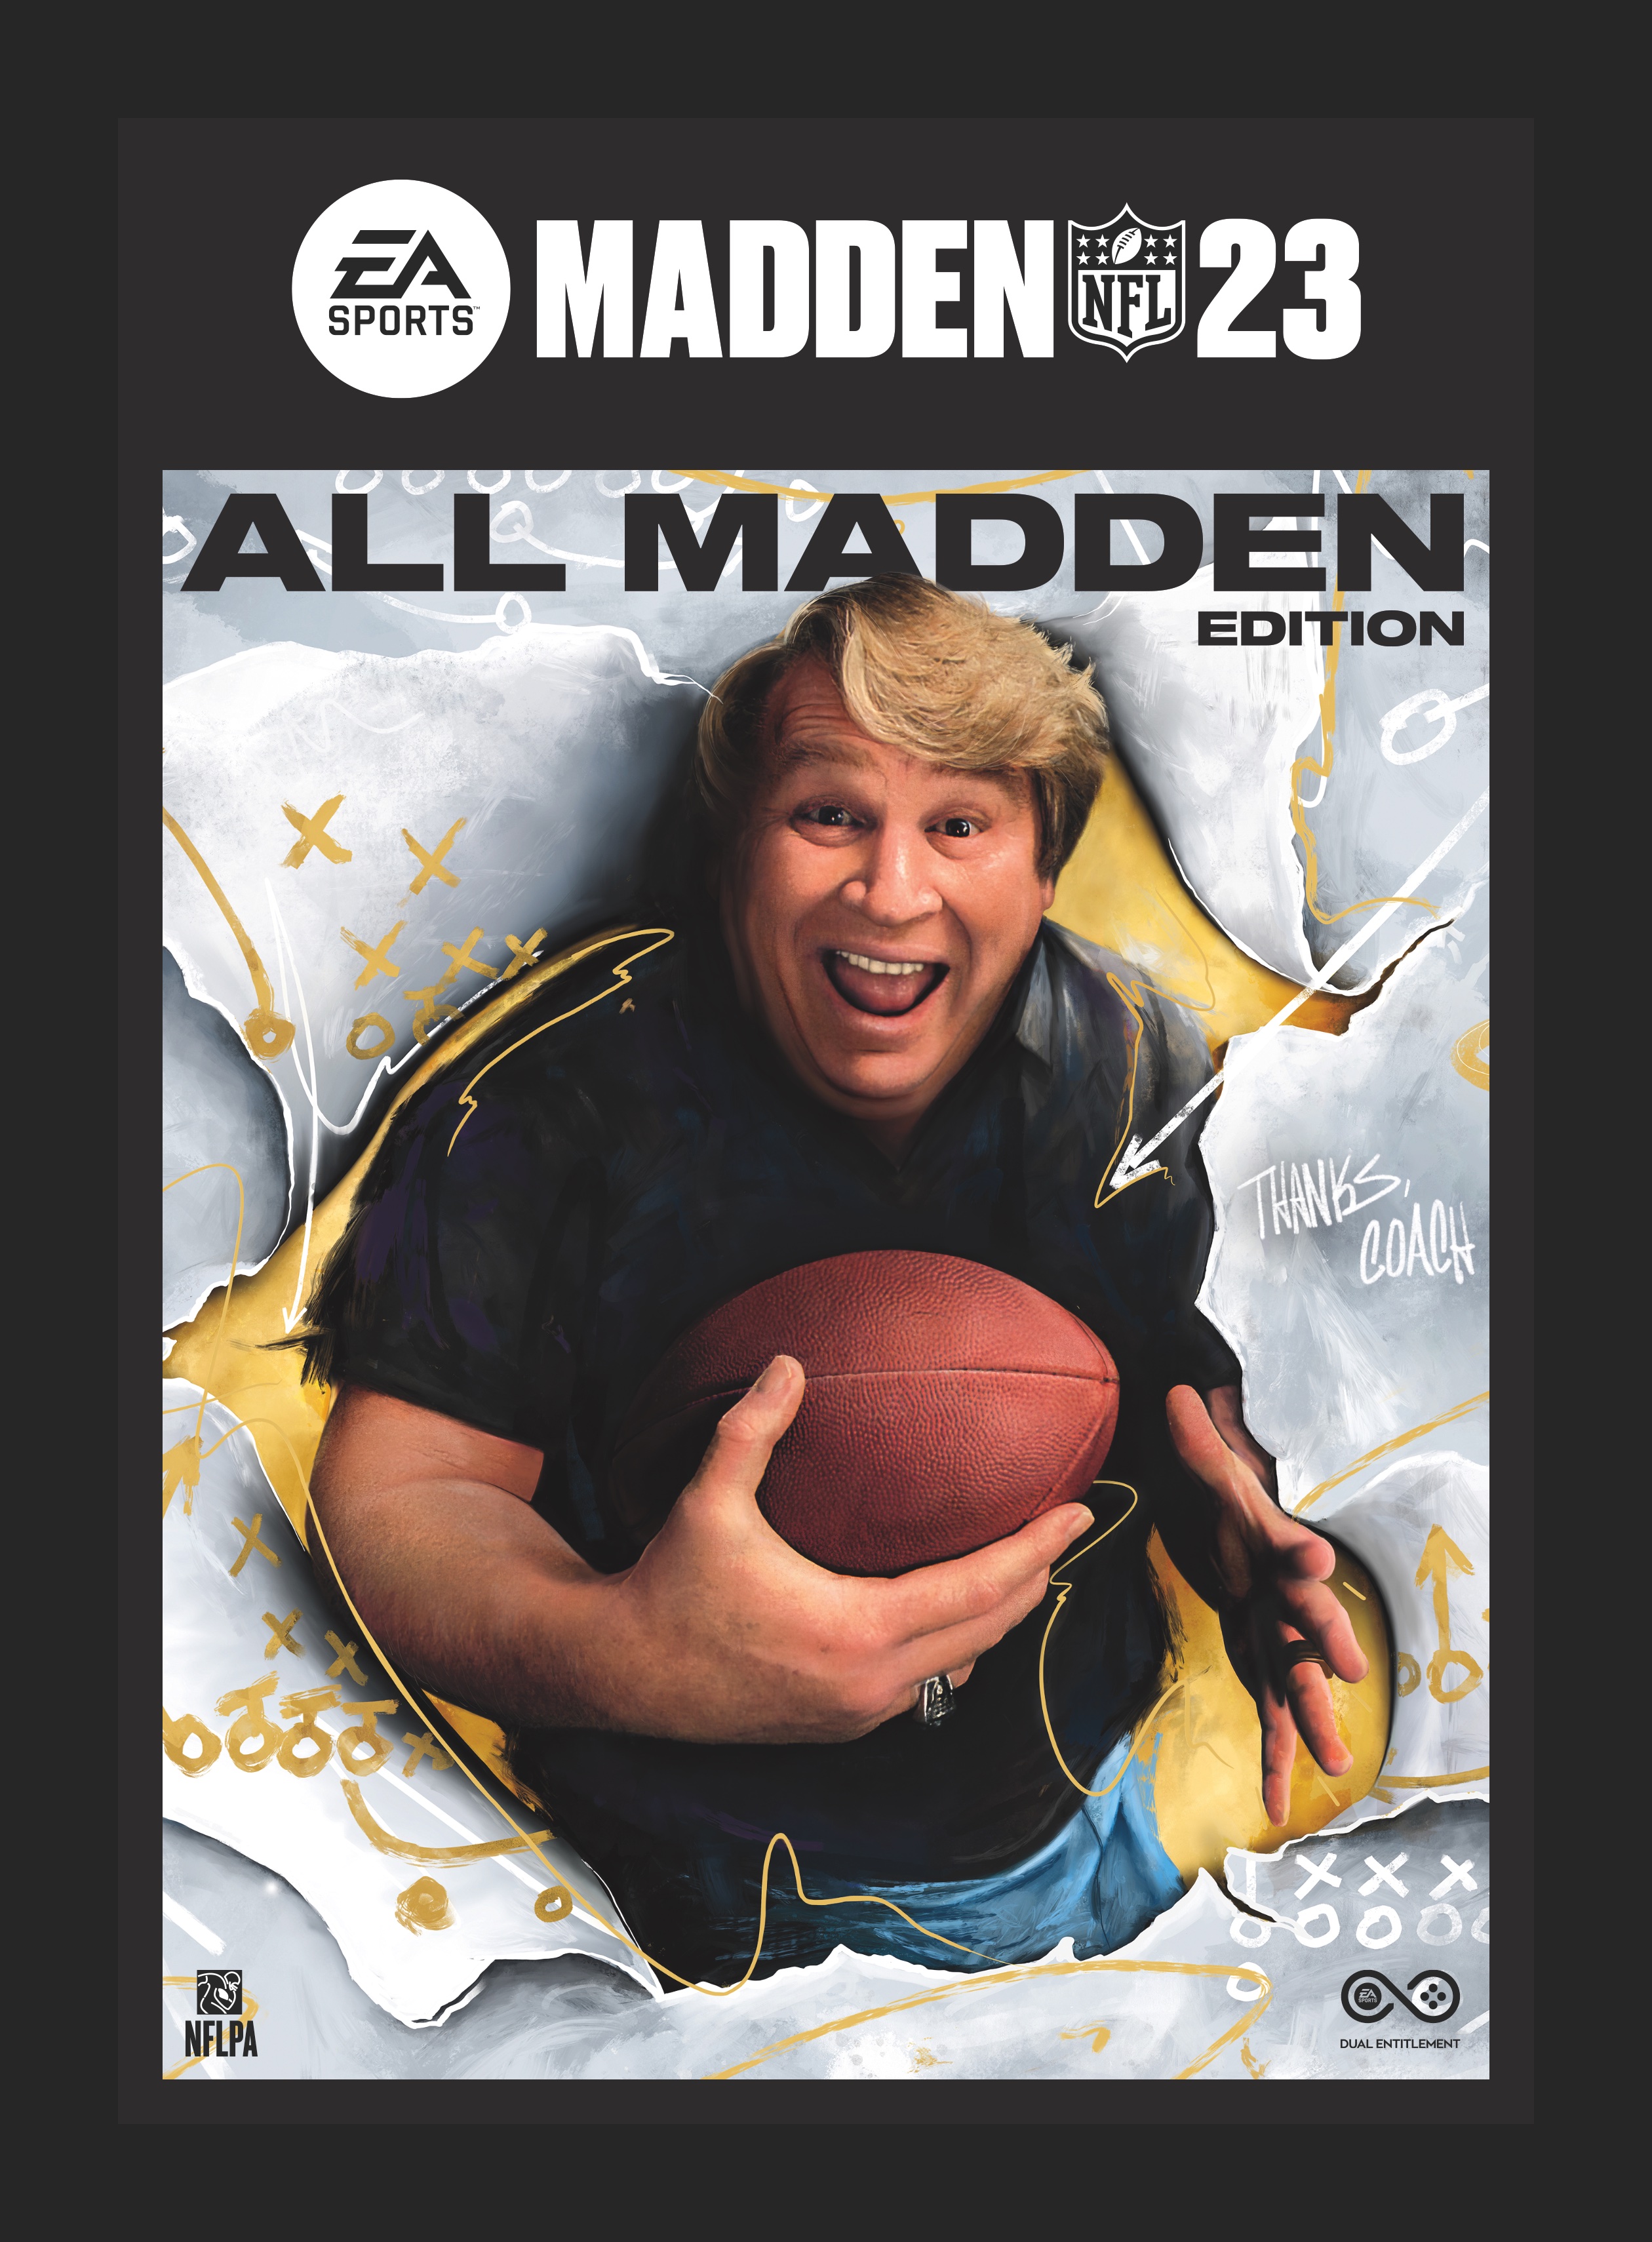 A vertical version of Madden NFL 23: All Madden Edition's key art.